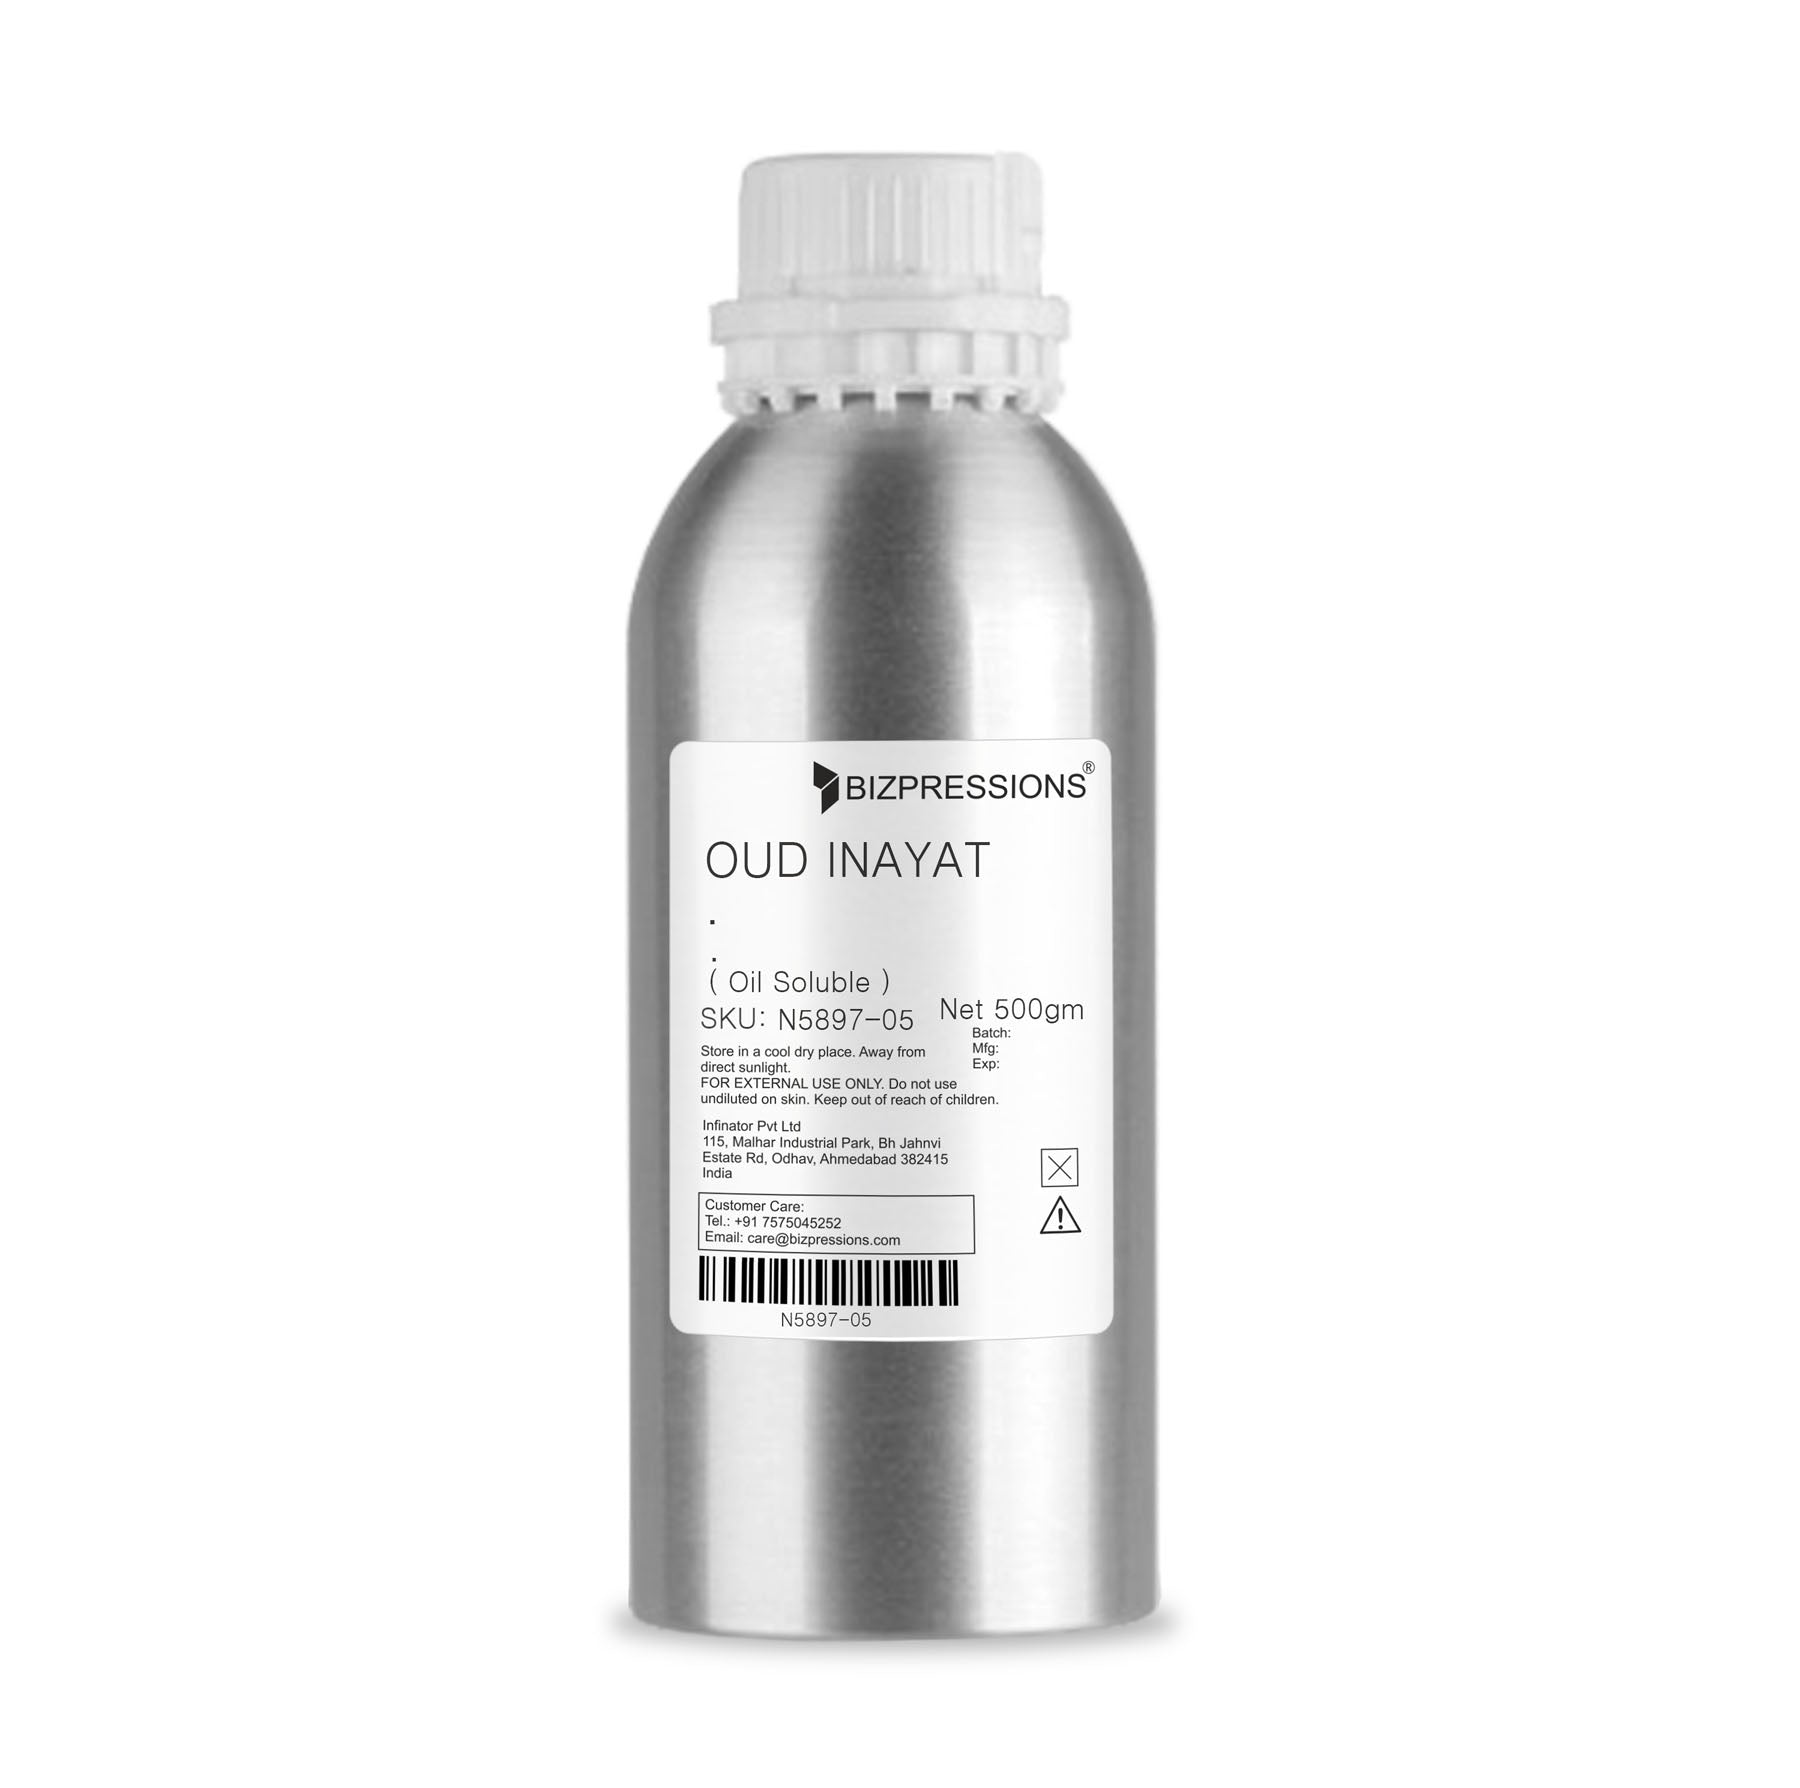 OUD INAYAT - Fragrance ( Oil Soluble ) - 500 gm